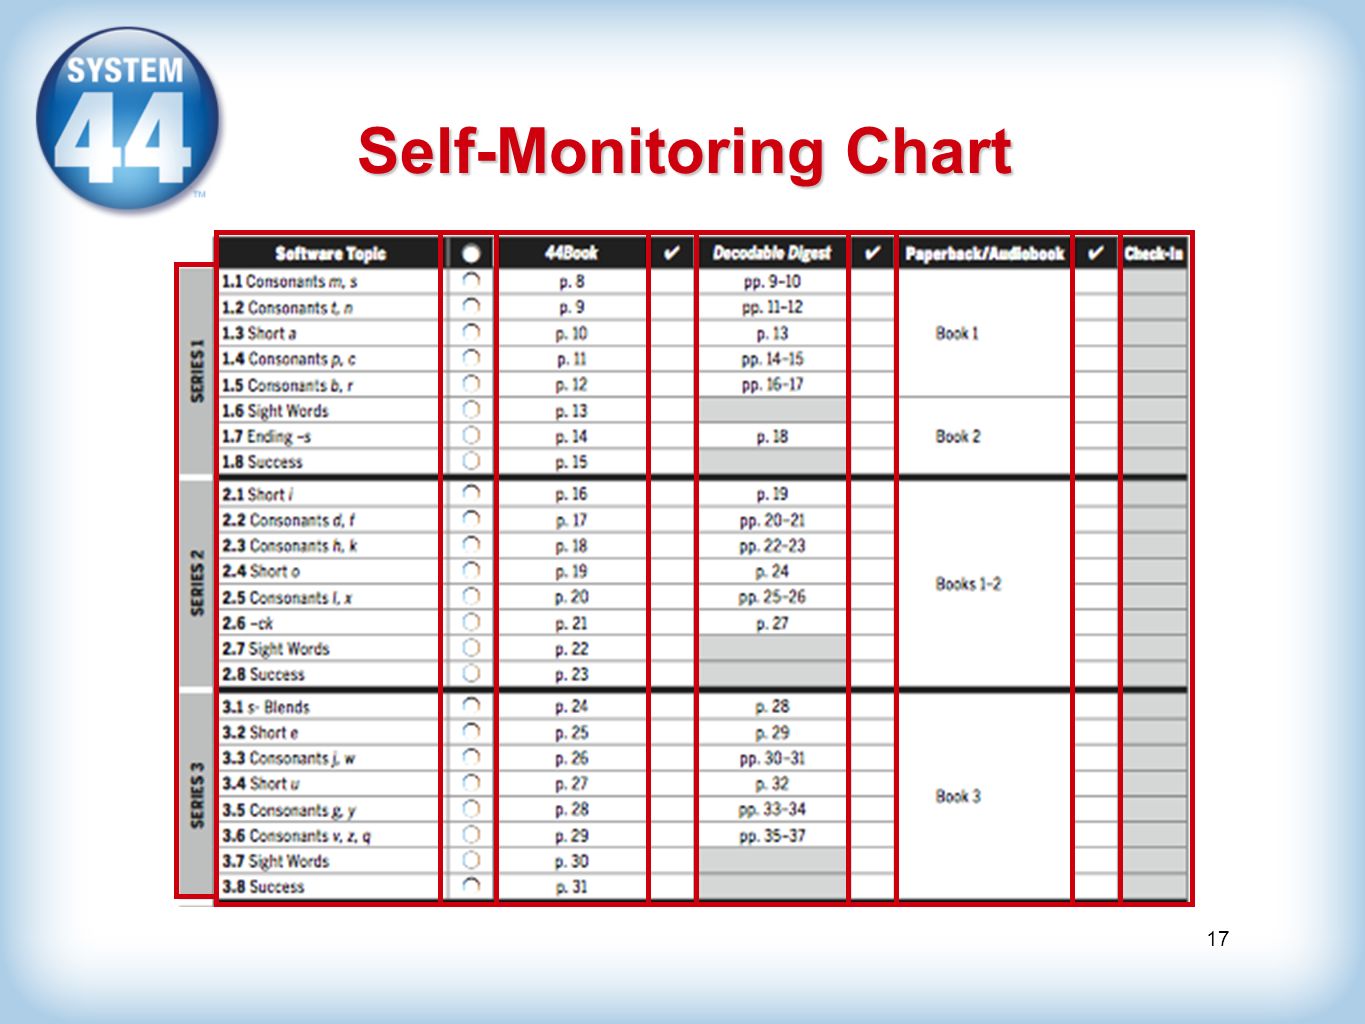 System 44 Self Monitoring Chart